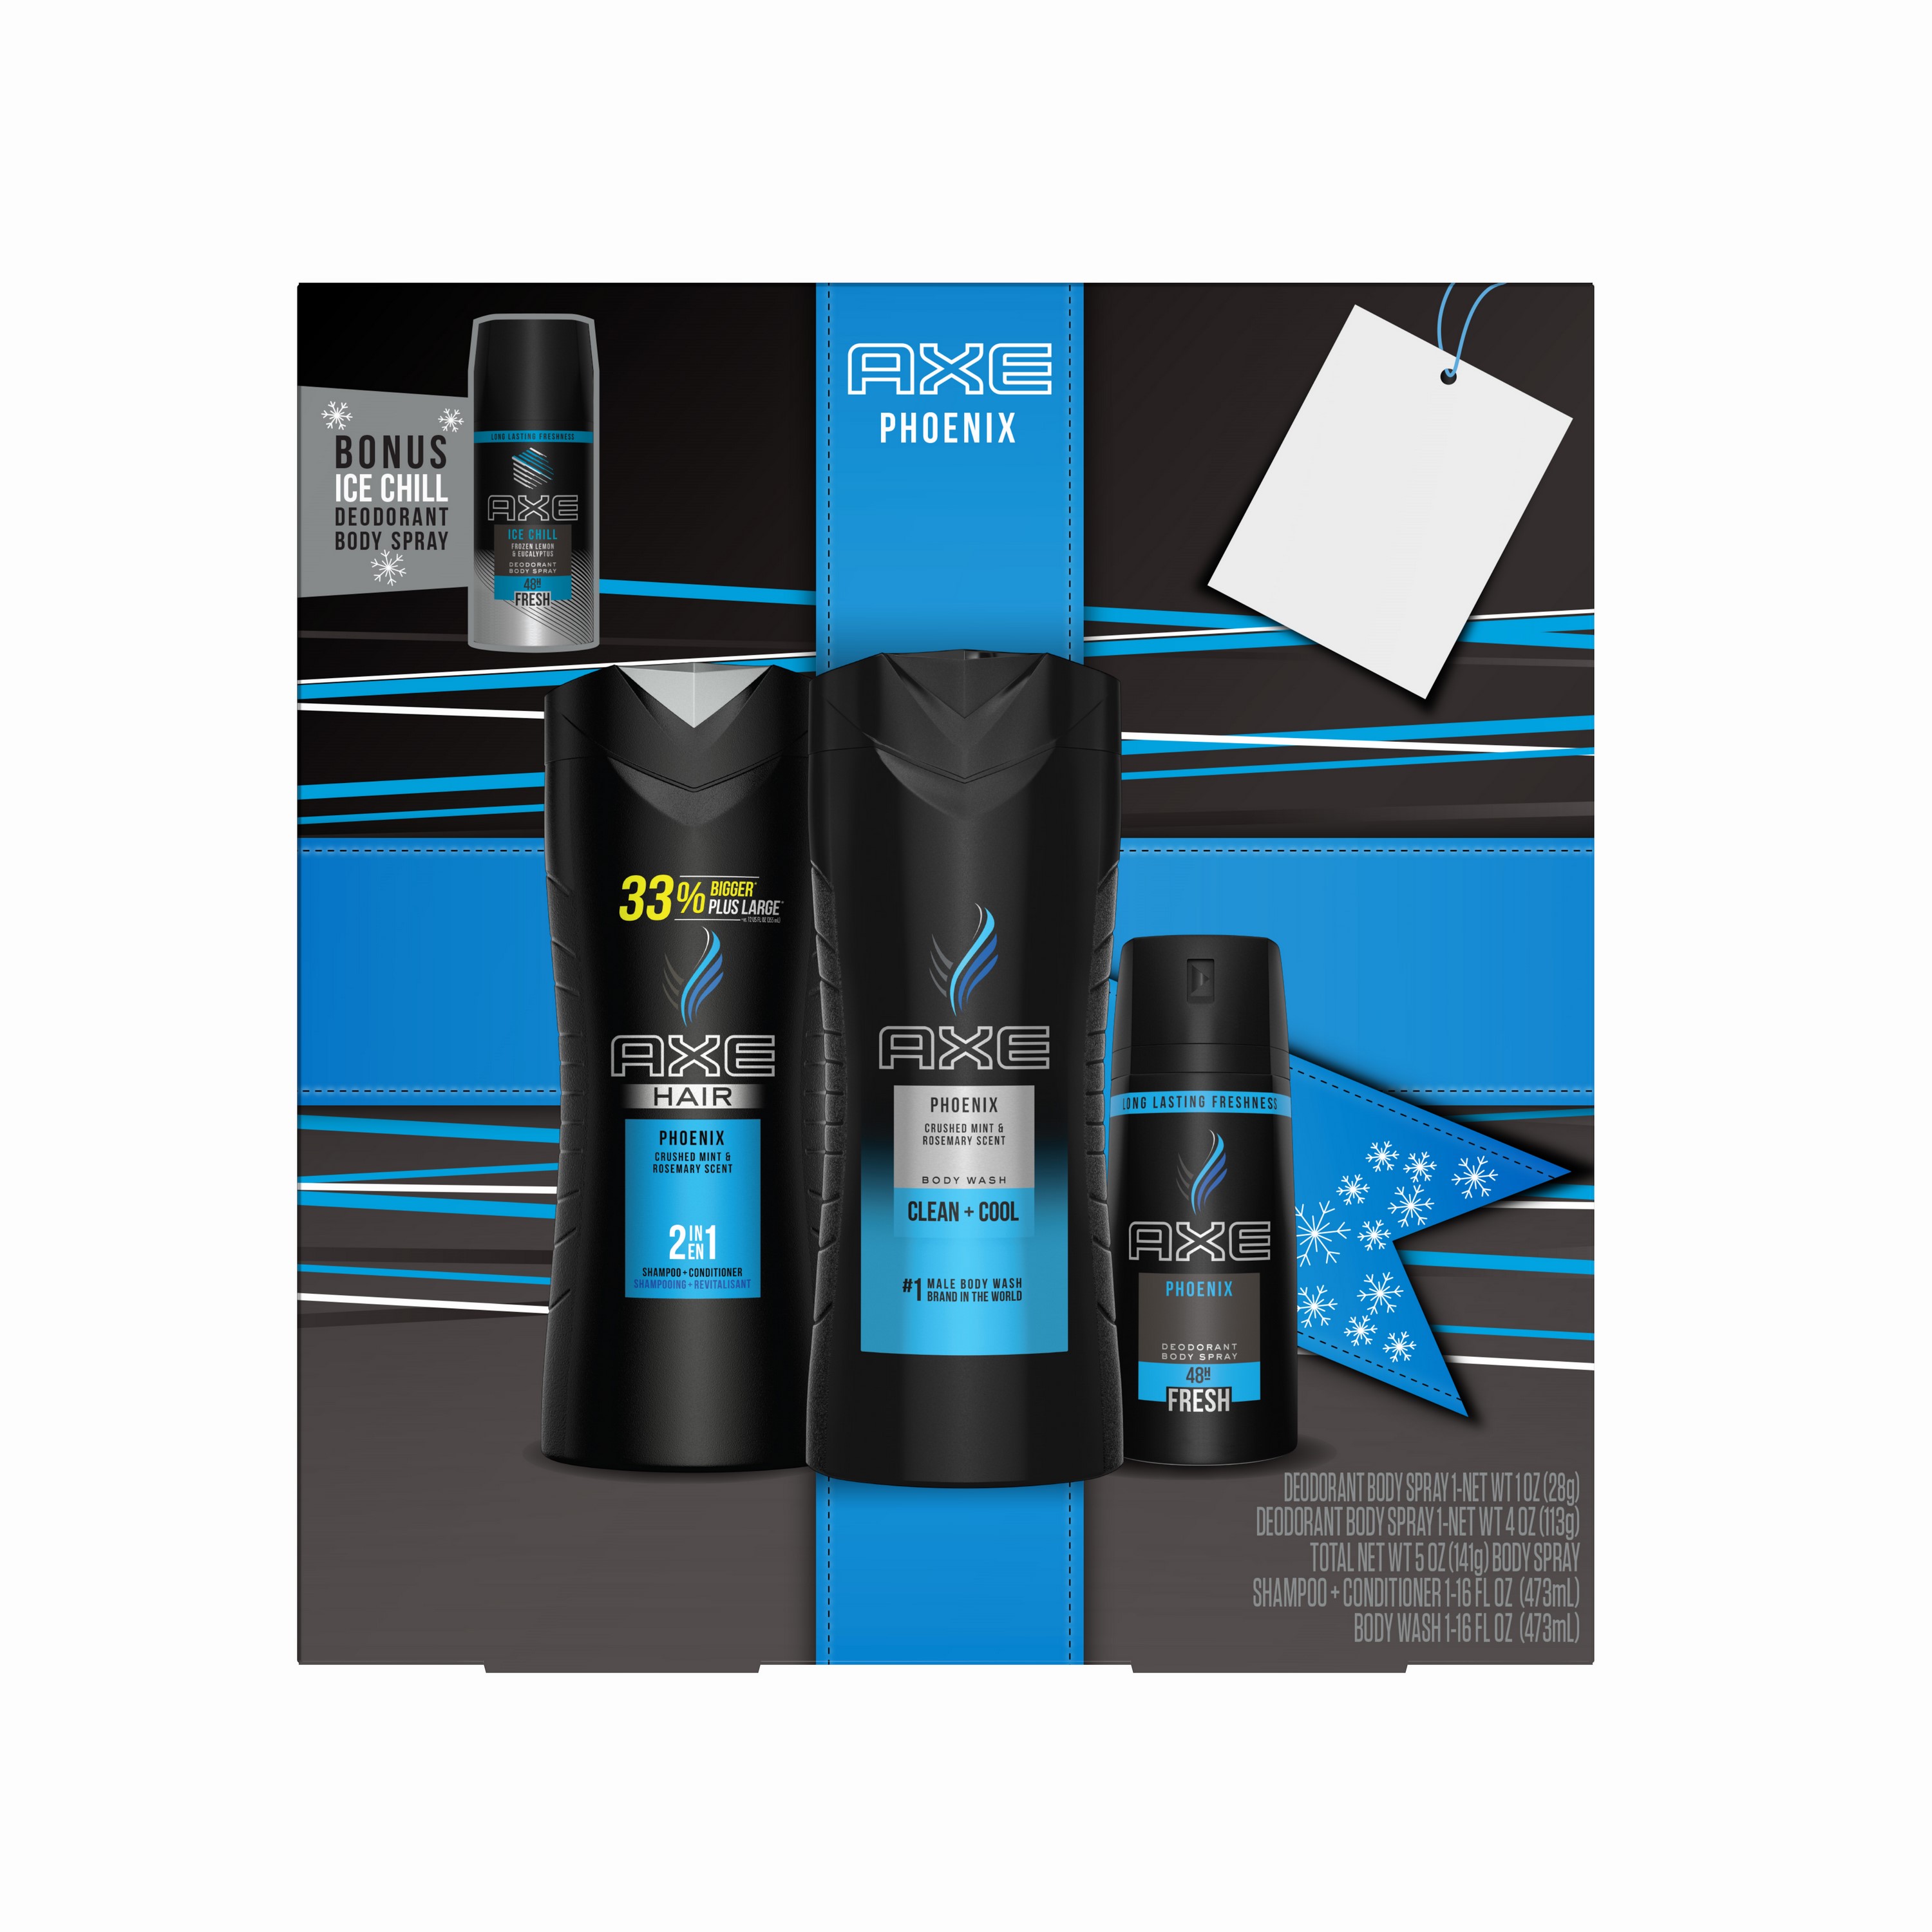 ($14 Value) AXE 4-pc Phoenix Holiday Gift Set (Body Spray, Bodywash, Shampoo with Bonus Body Spray) - image 1 of 7